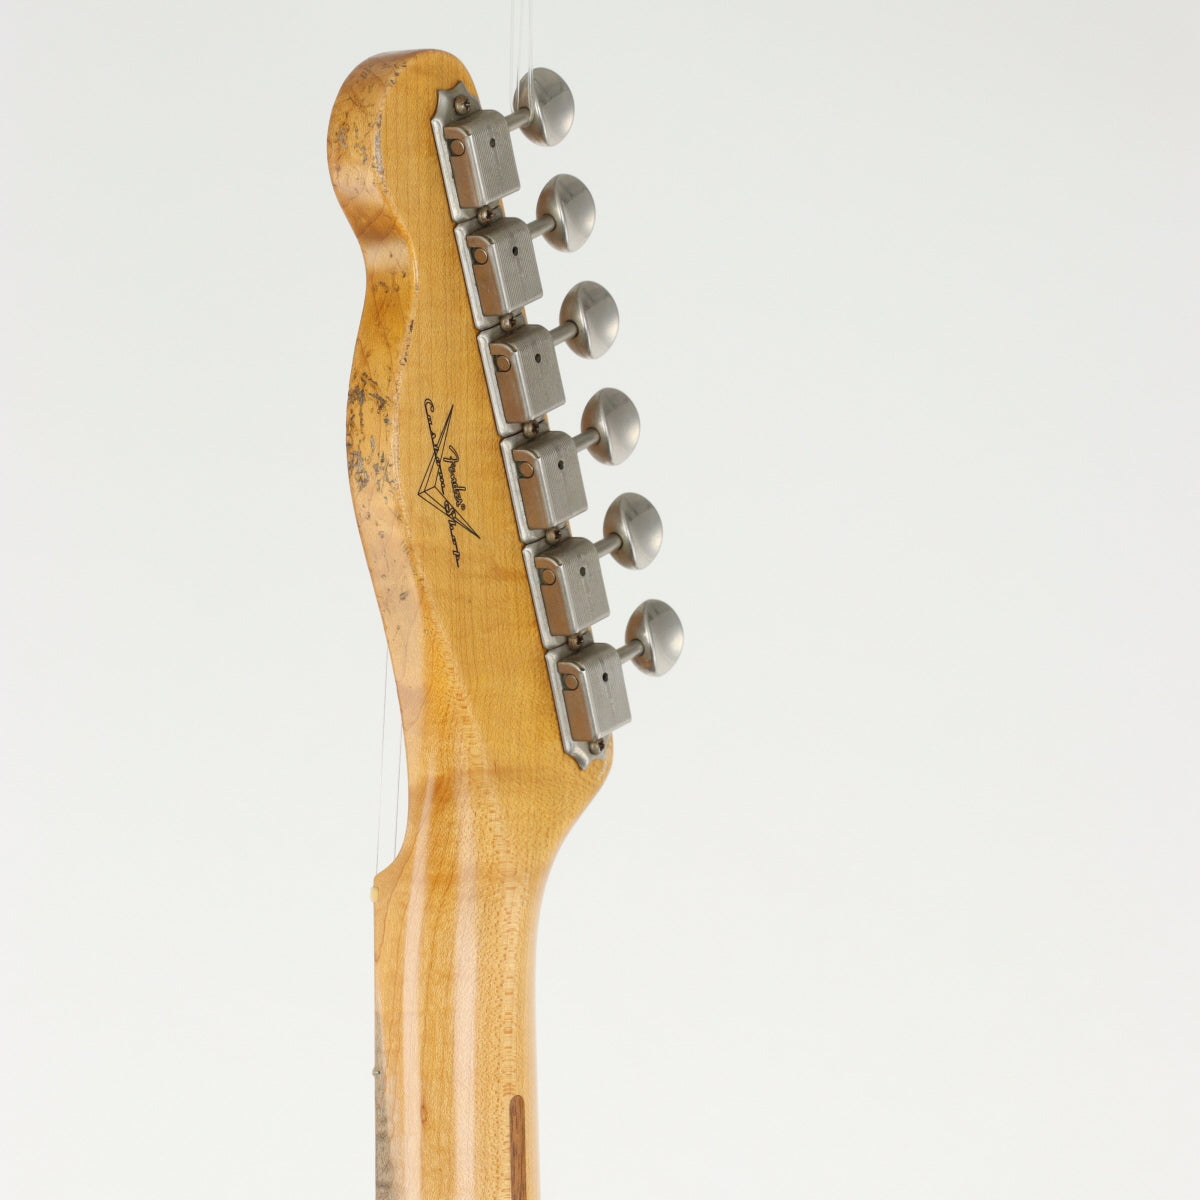 [SN R18373] USED Fender Custom Shop / Custom Shop 1951 Nocaster Relic Aged Black [11]